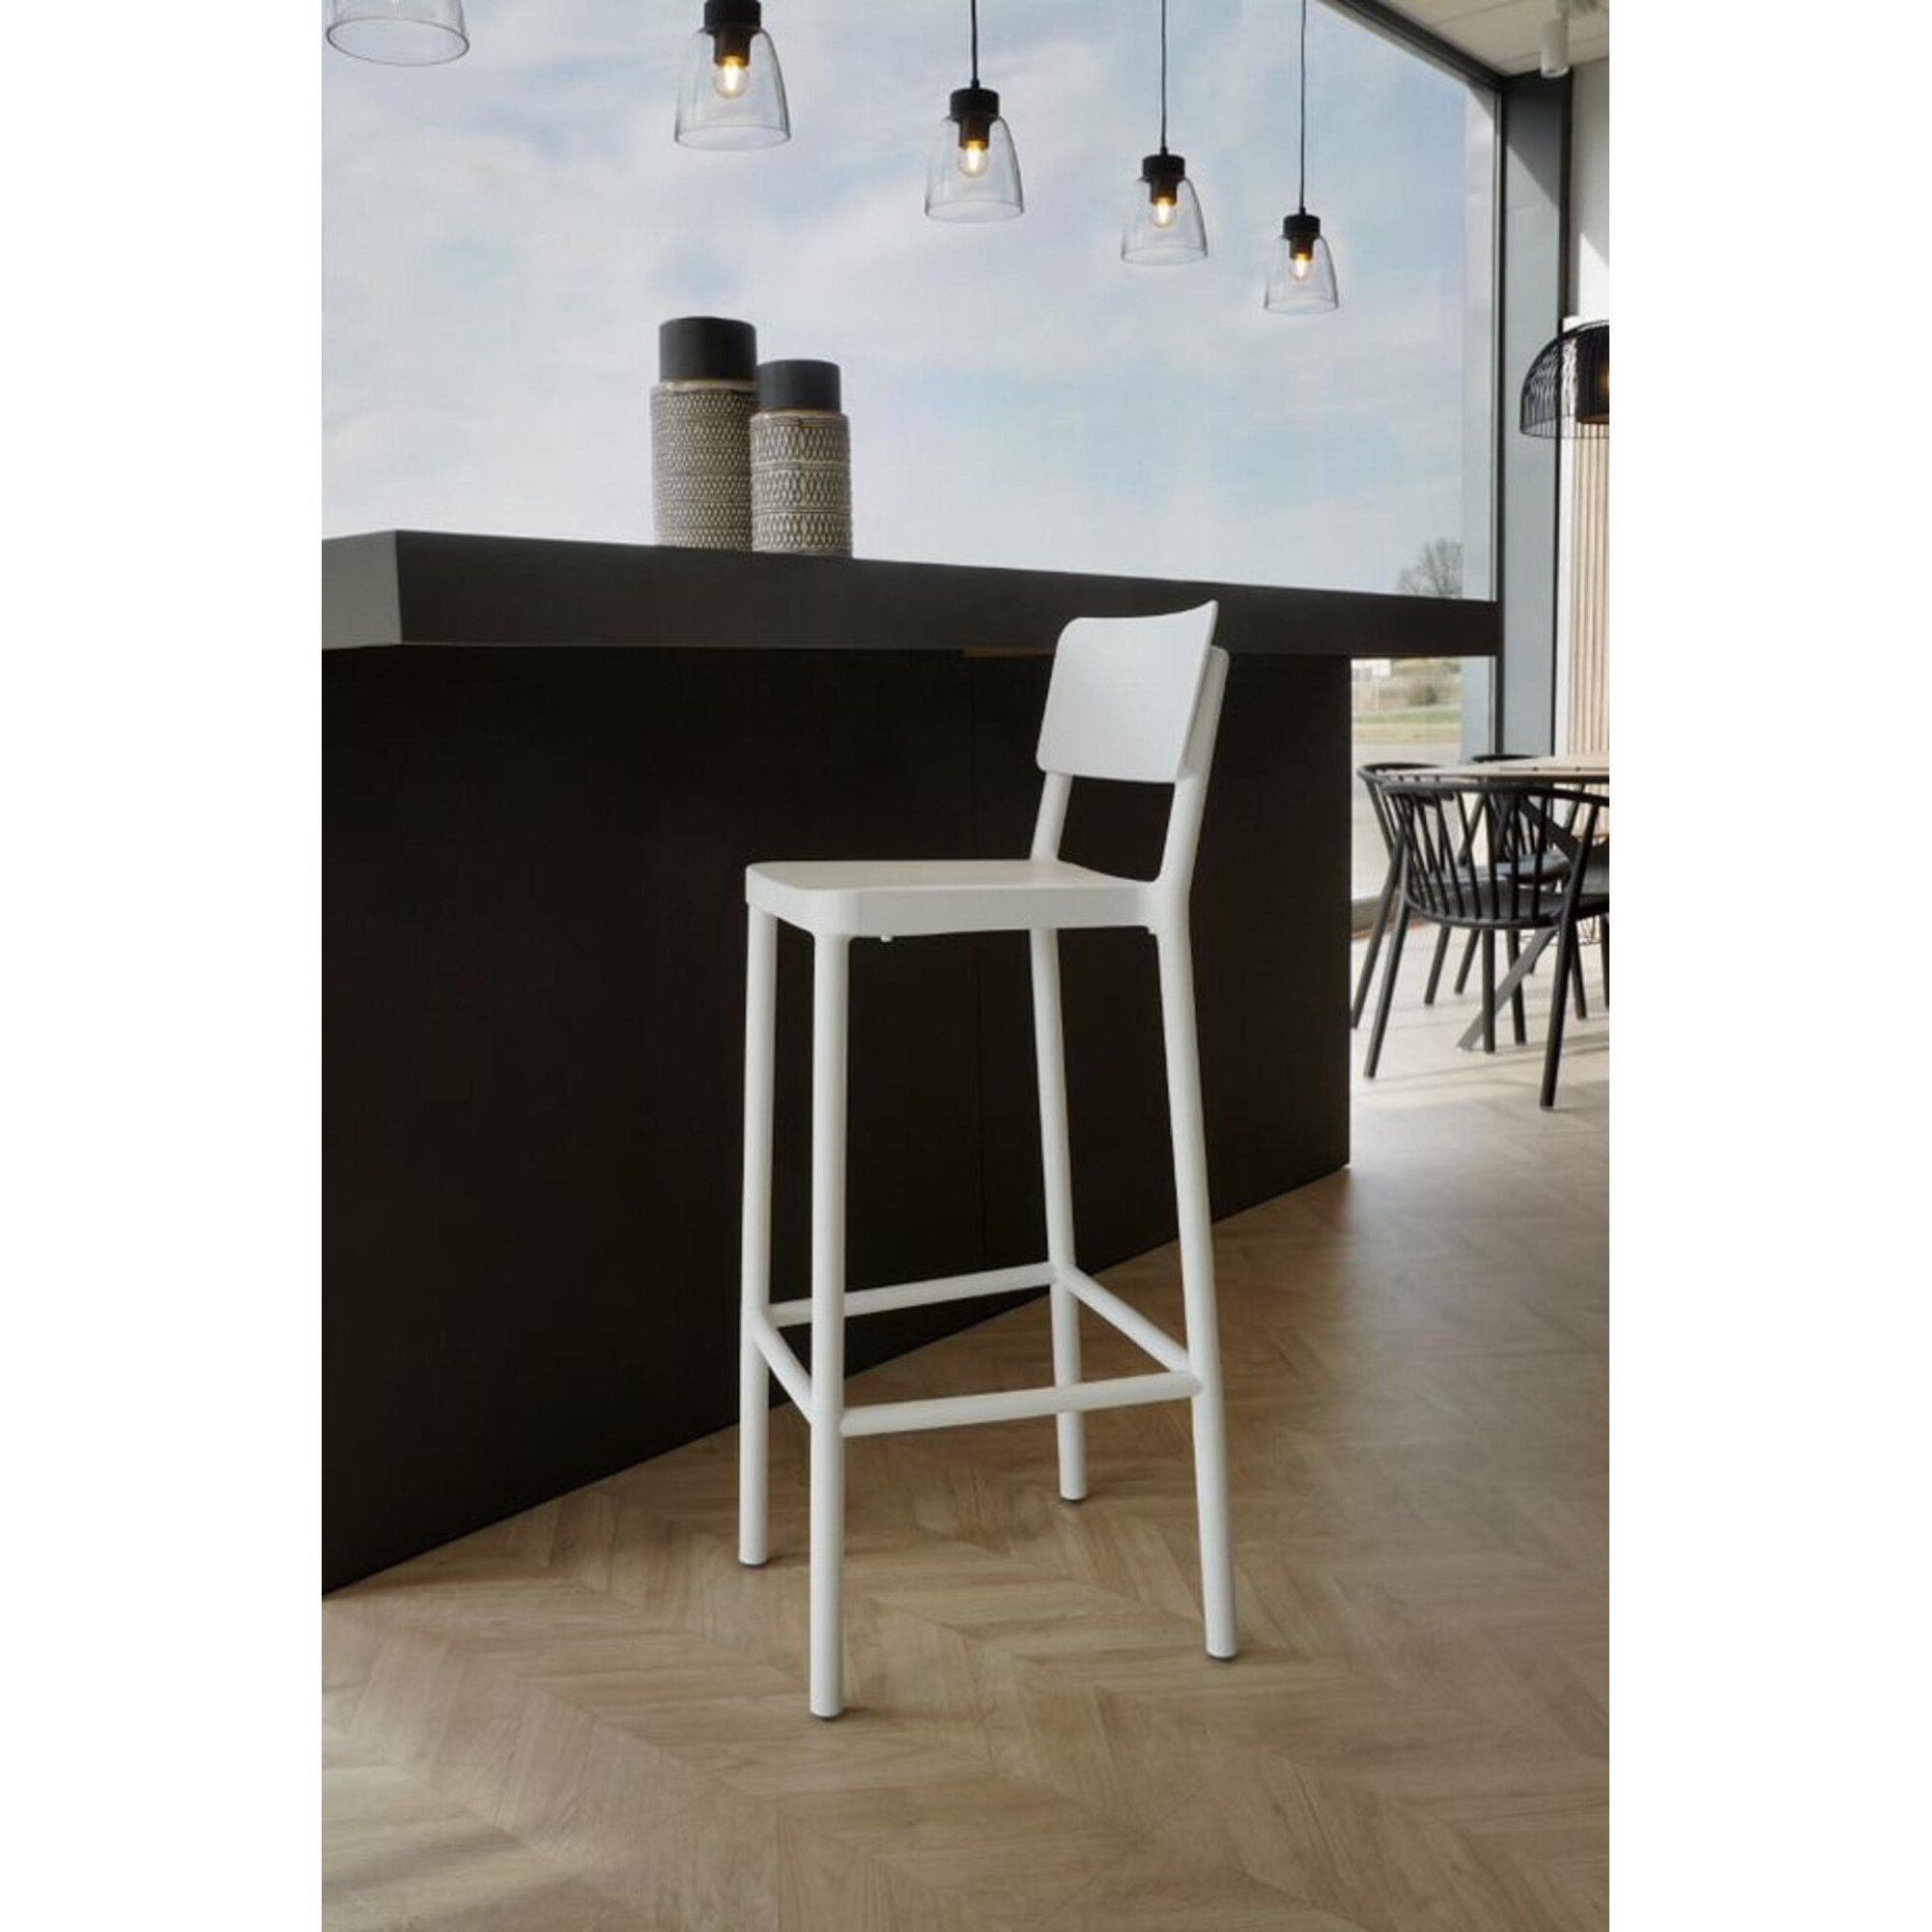 Resol lisboa high stool indoors, dark gray outdoors